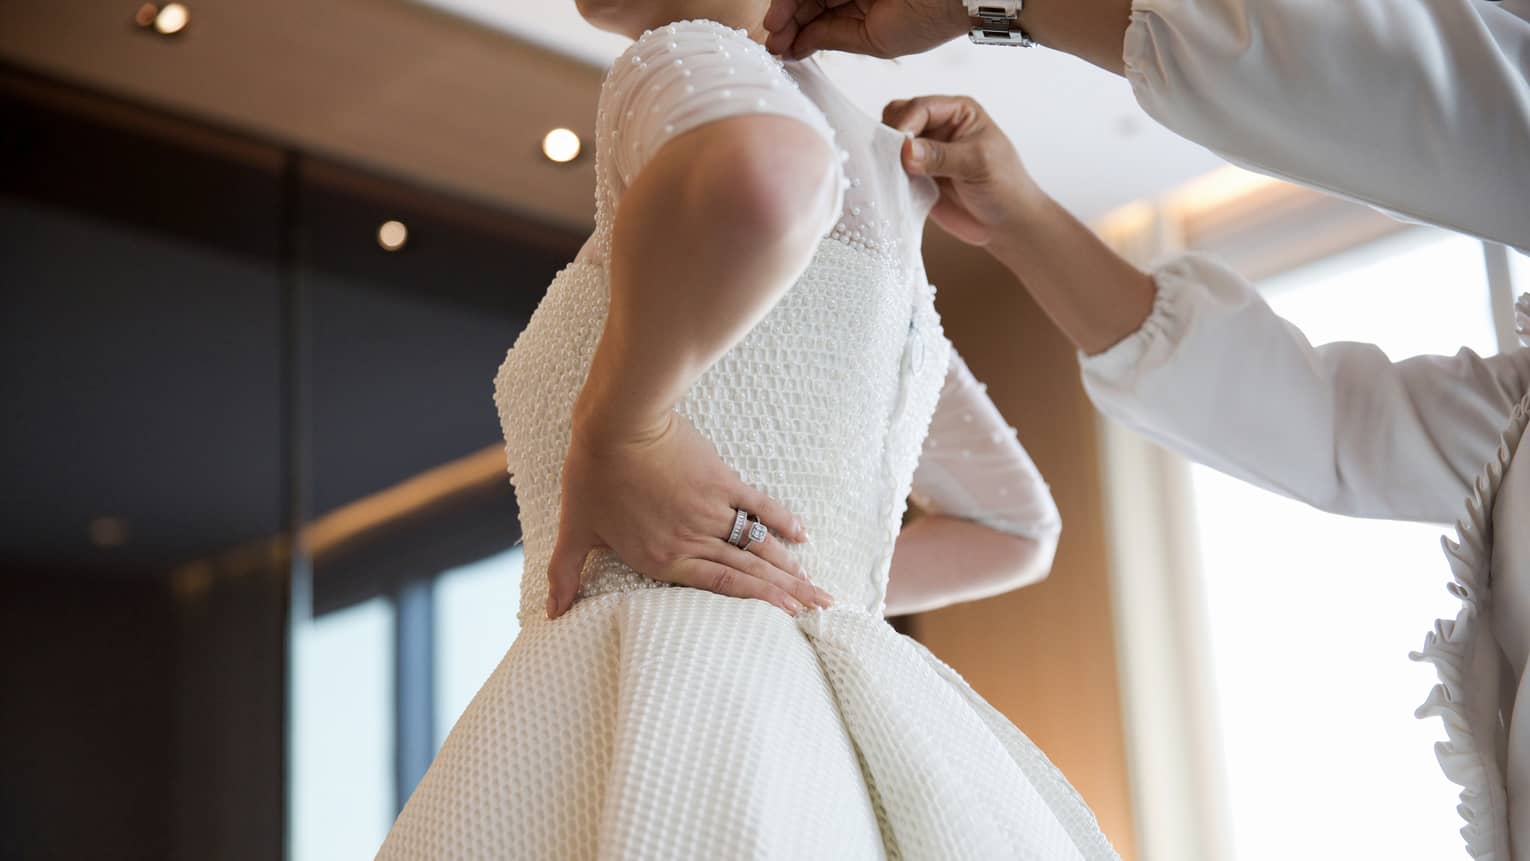 Person zips up bride's white wedding dress 